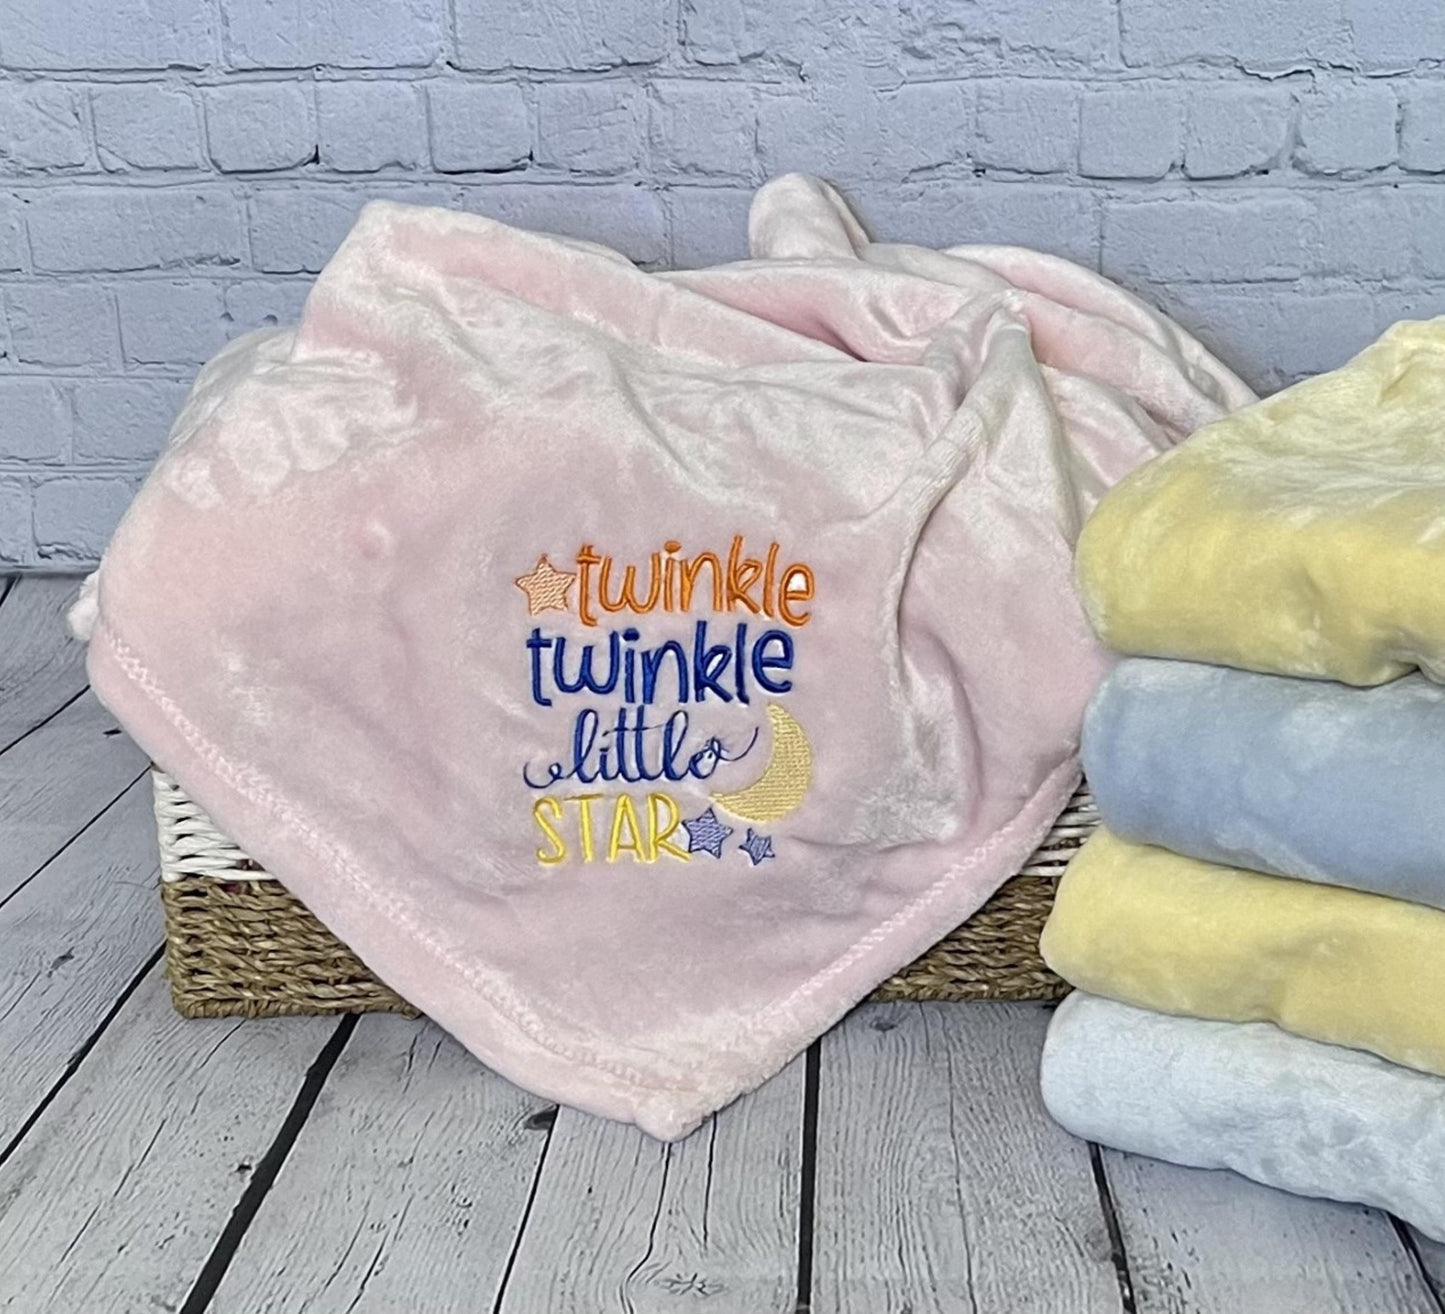 Twinkle Twinkle Little Star nursery rhyme baby blanket